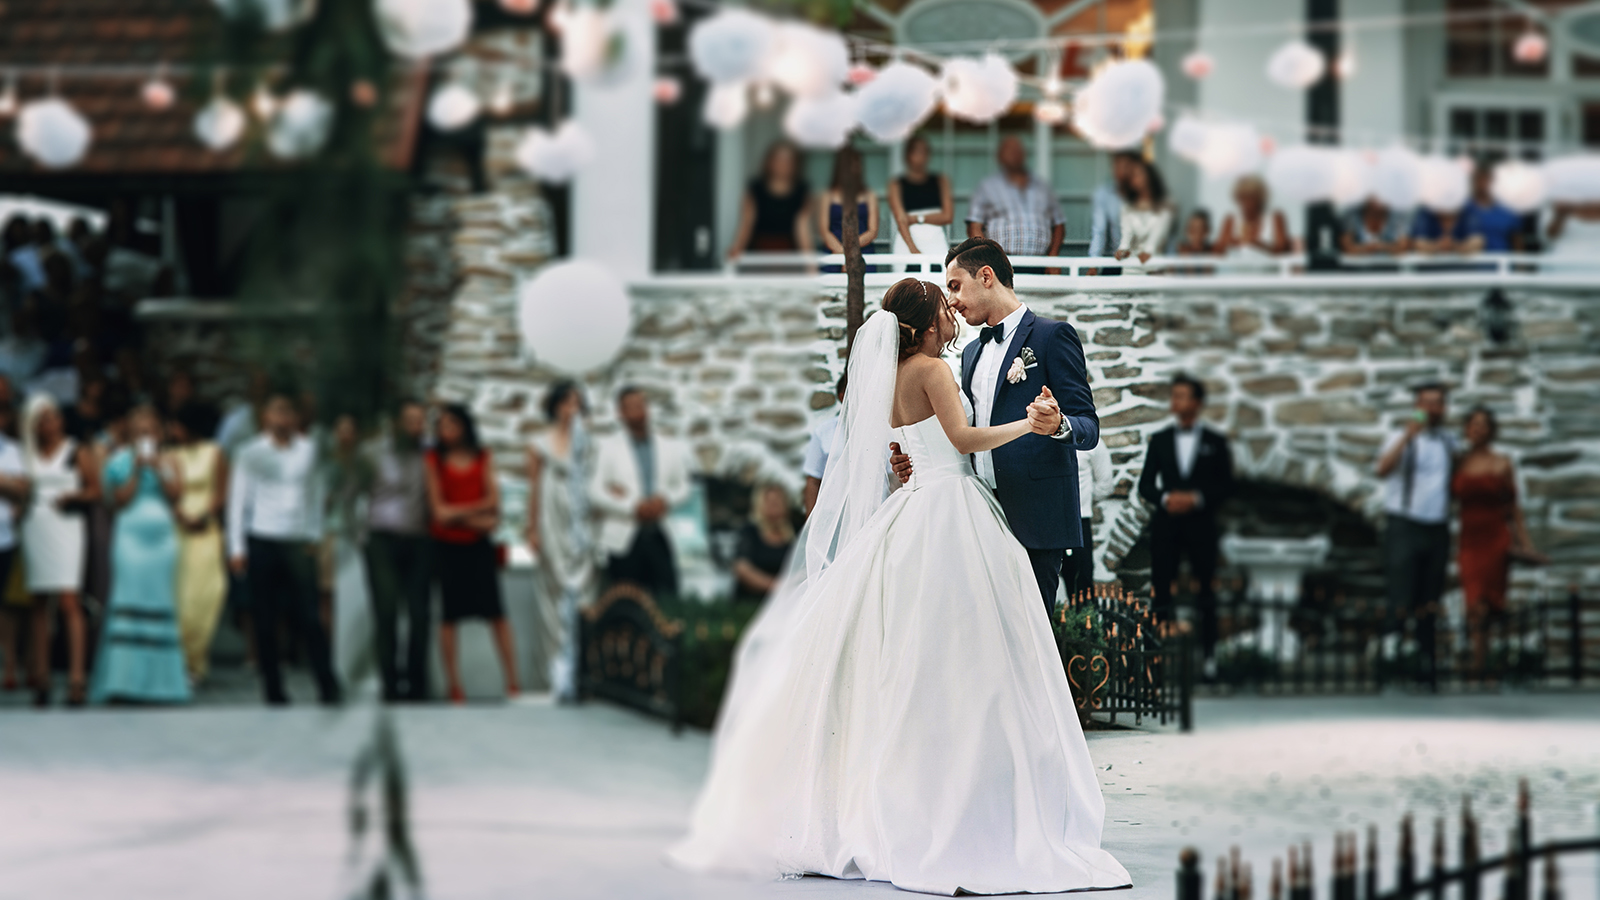 Sensual happy newlywed couple dancing outdoors at reception